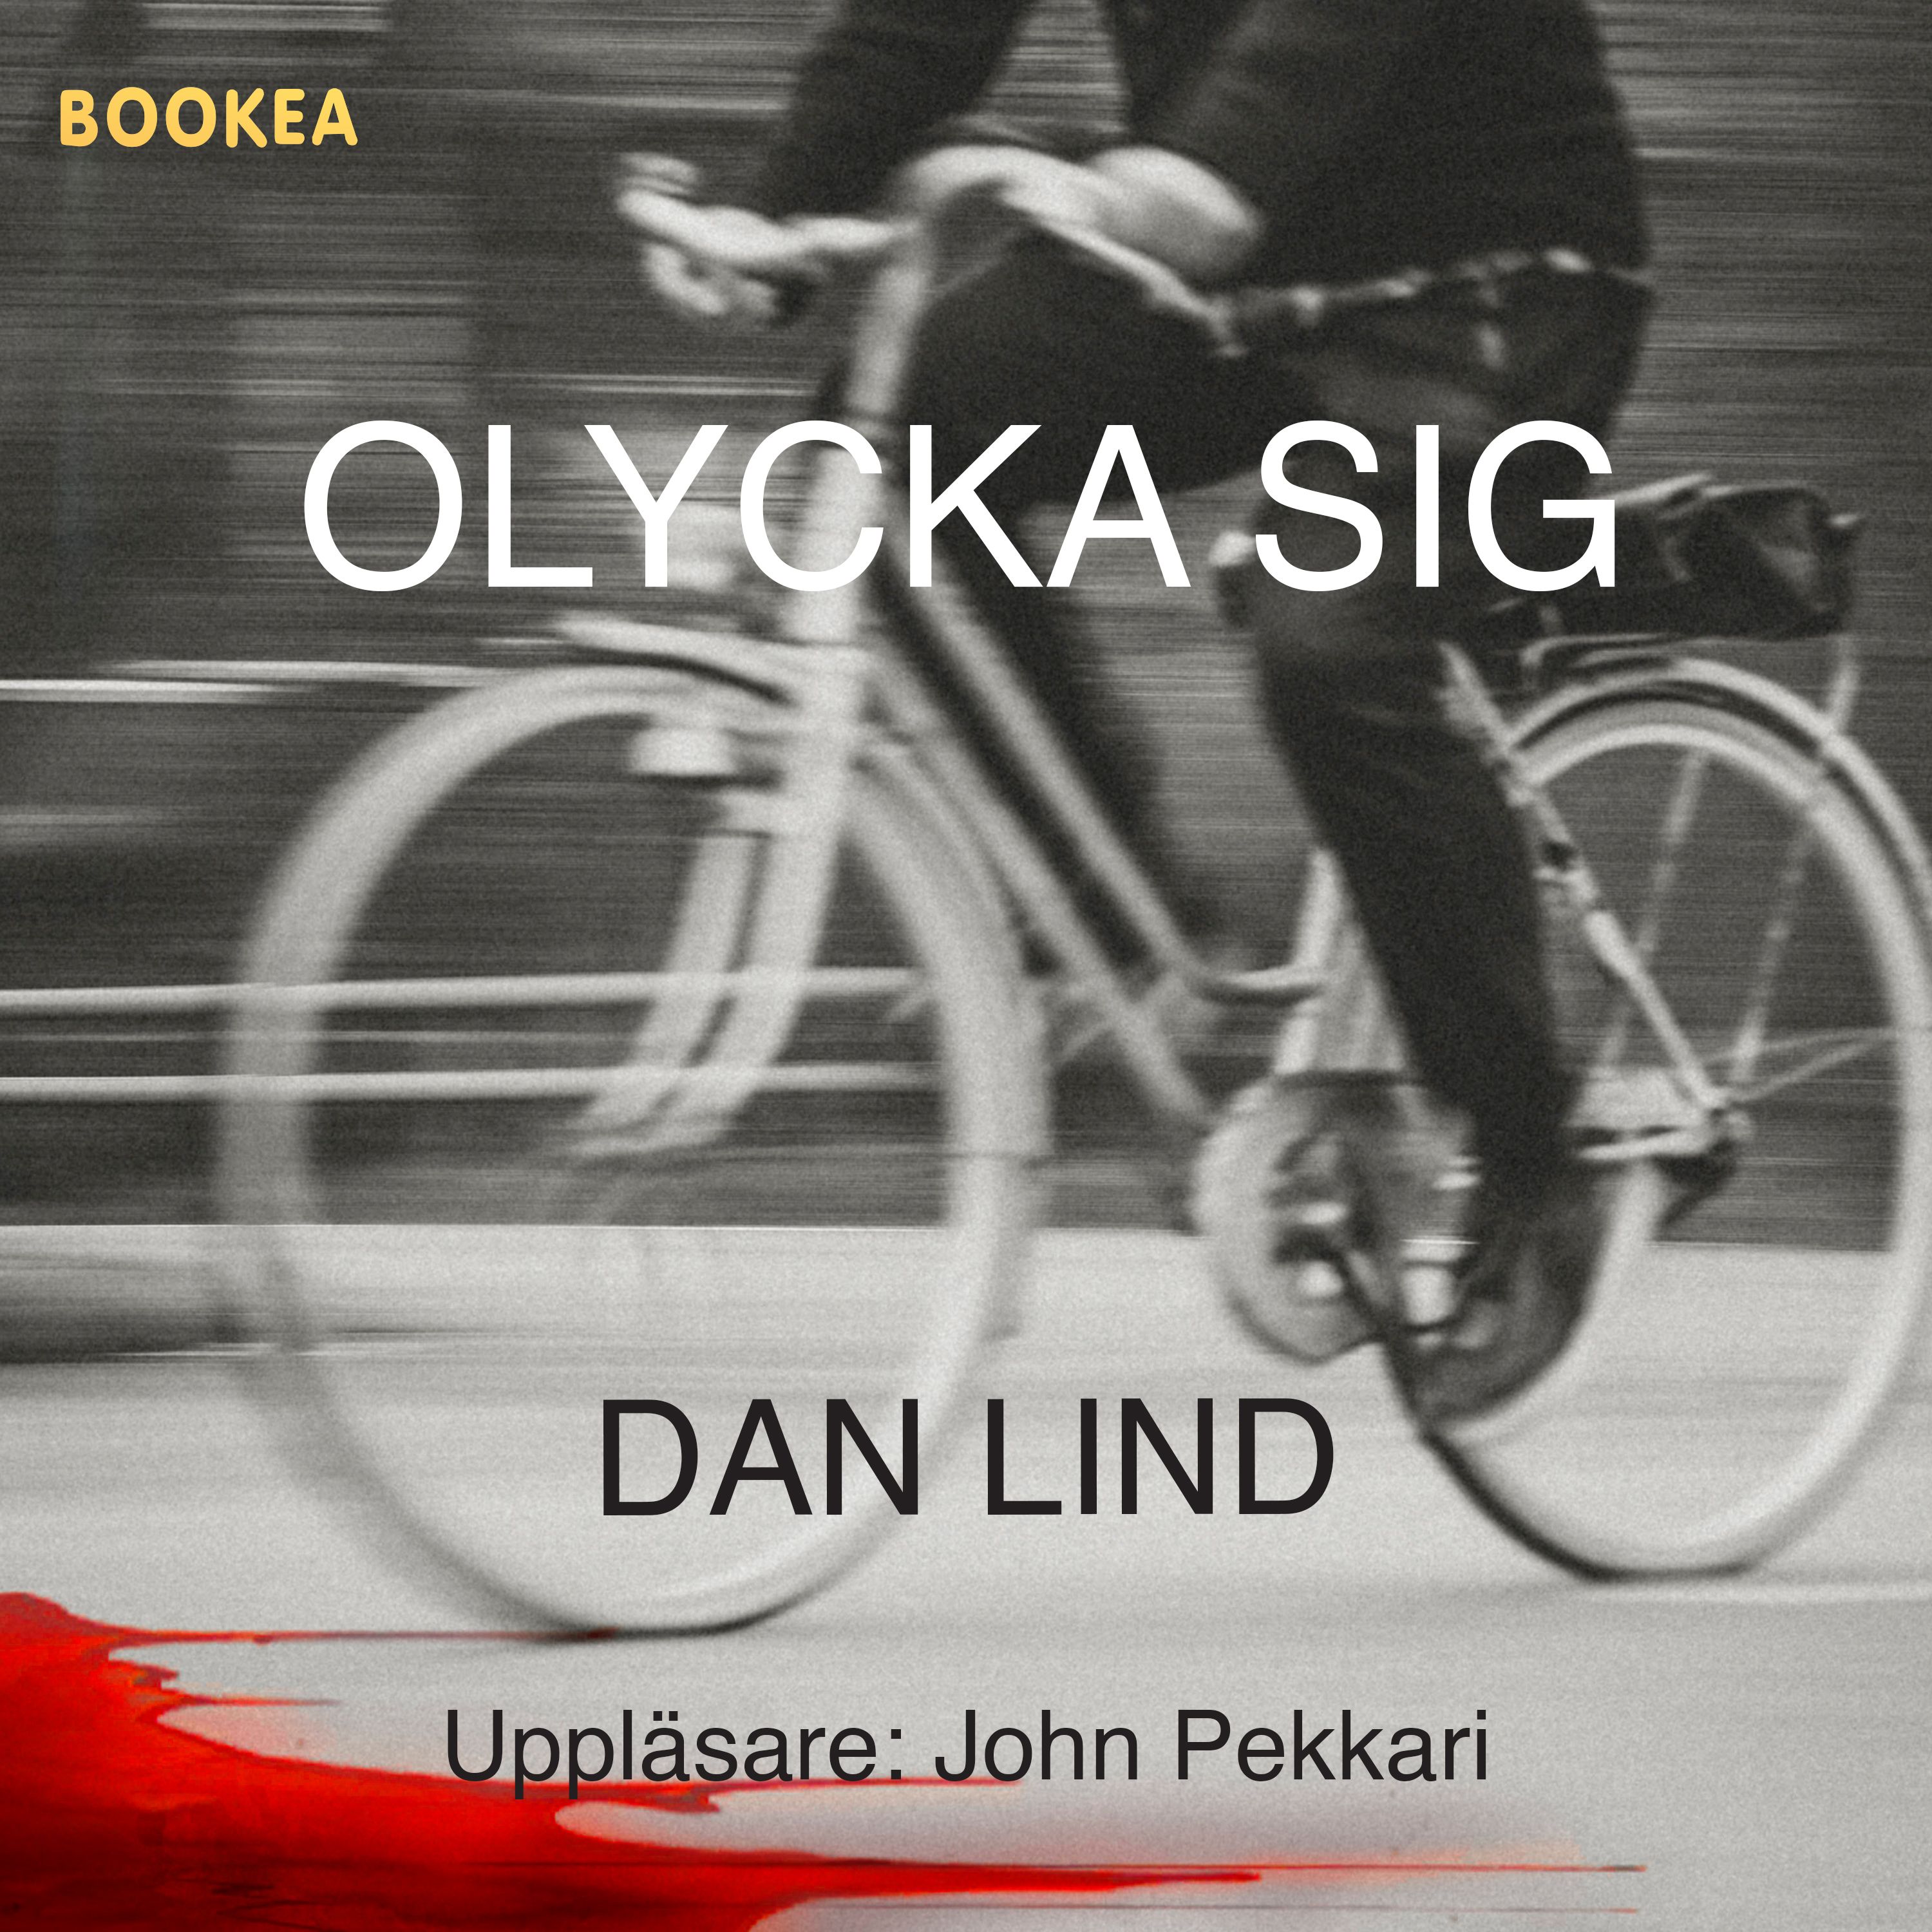 Olycka sig, audiobook by Dan Lind